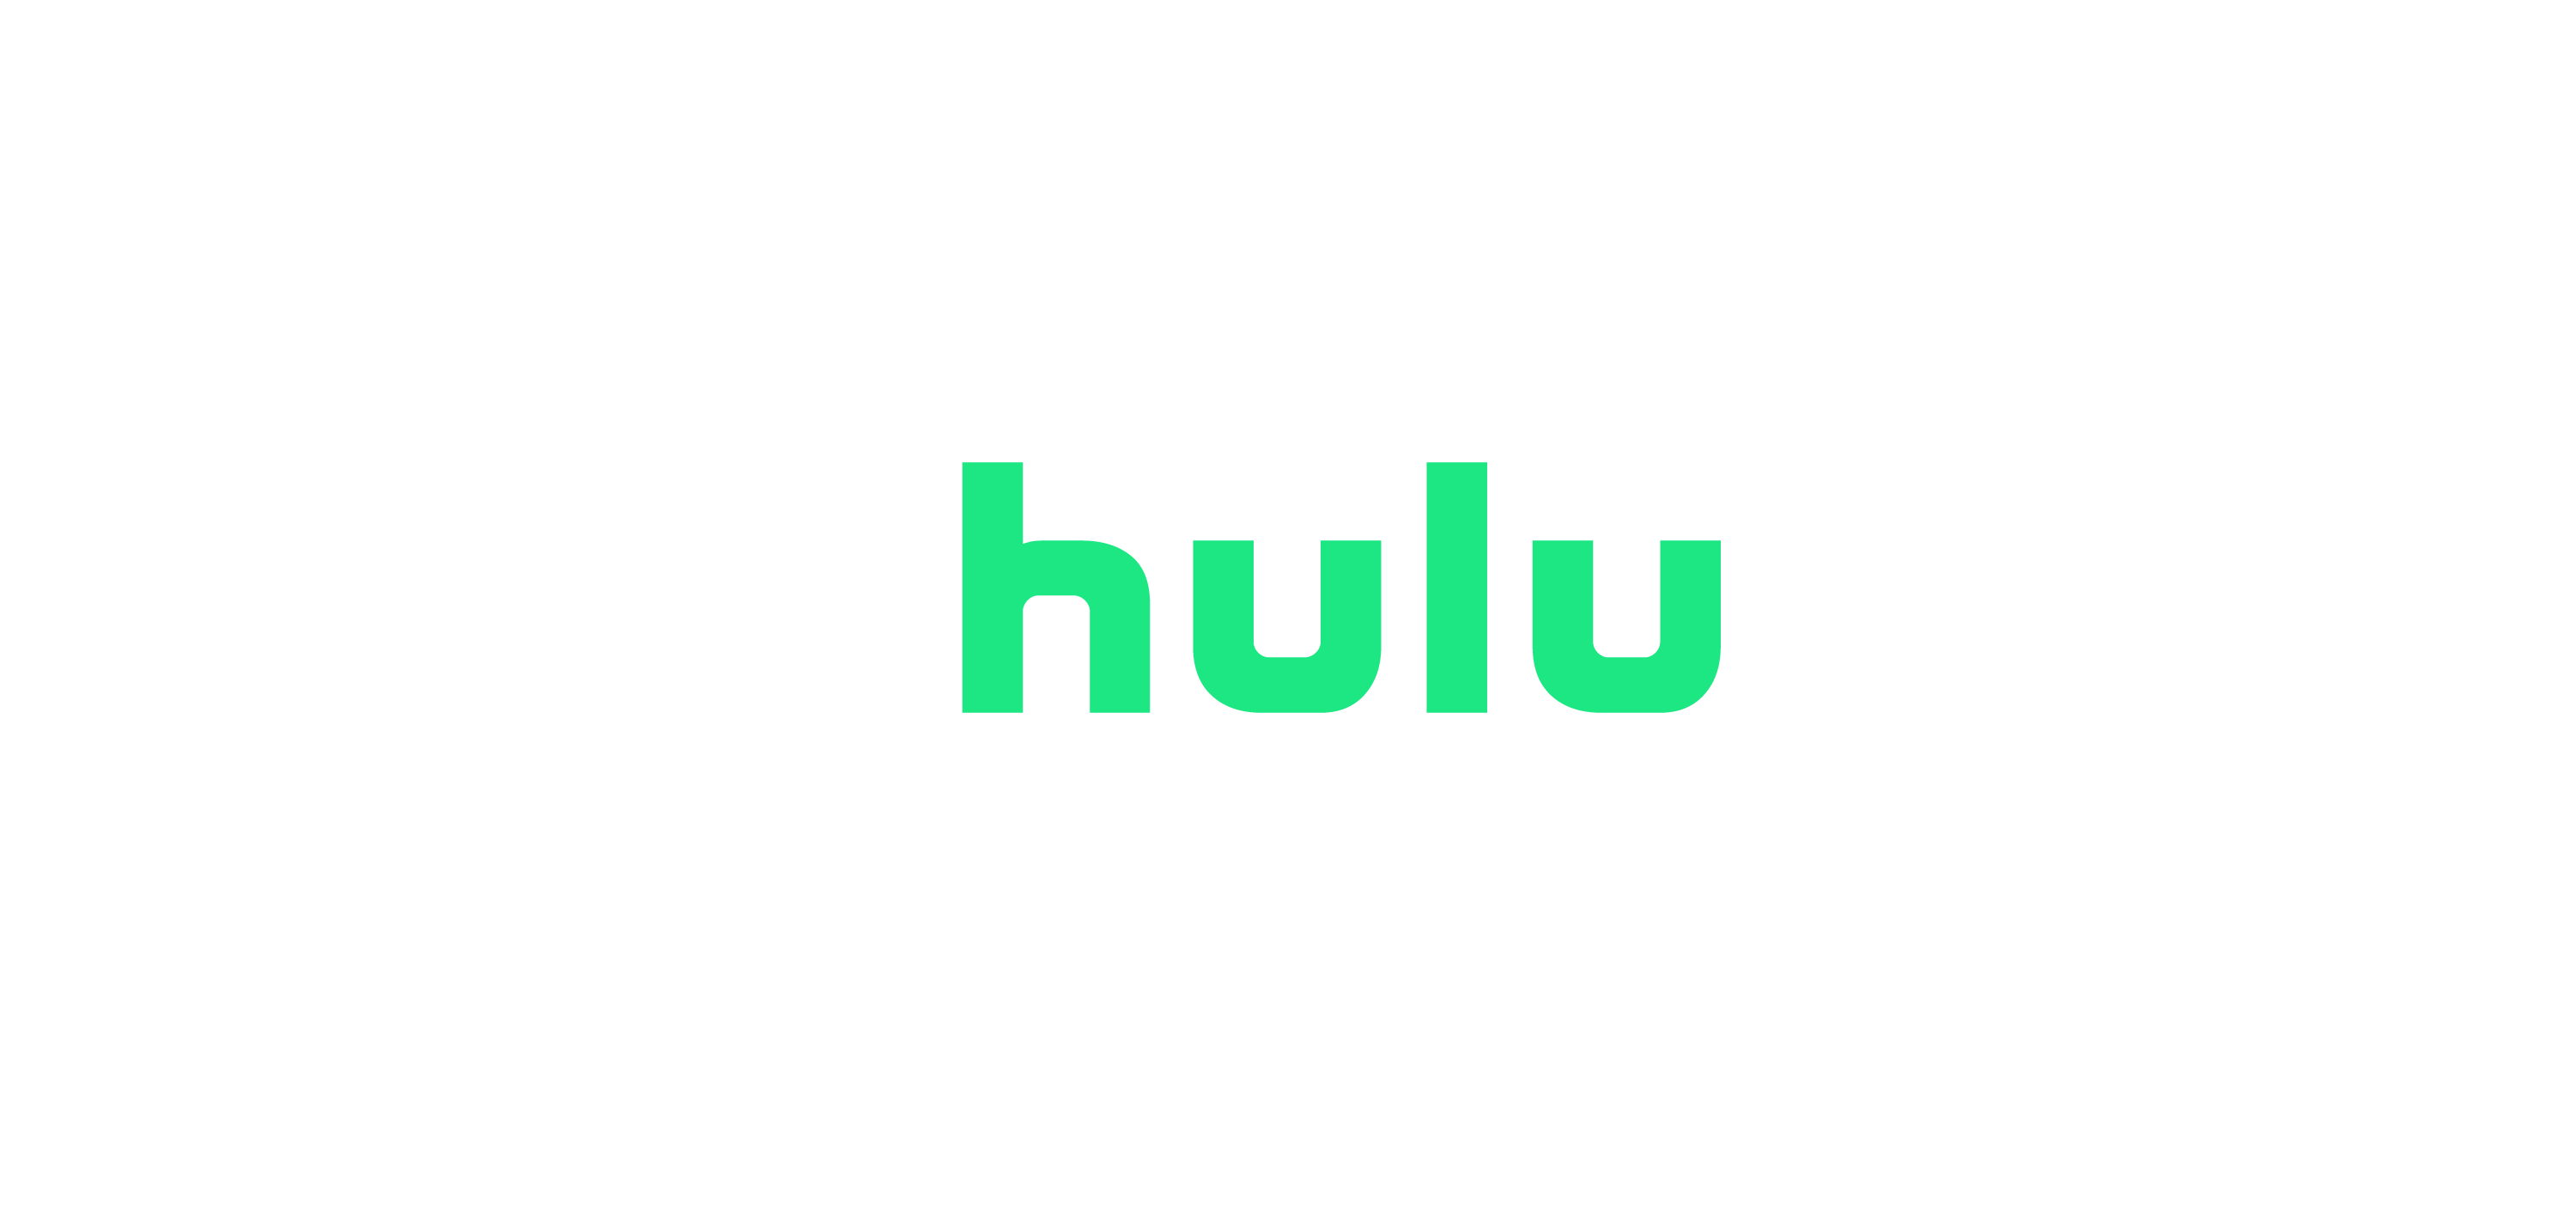 Hulu logo vector